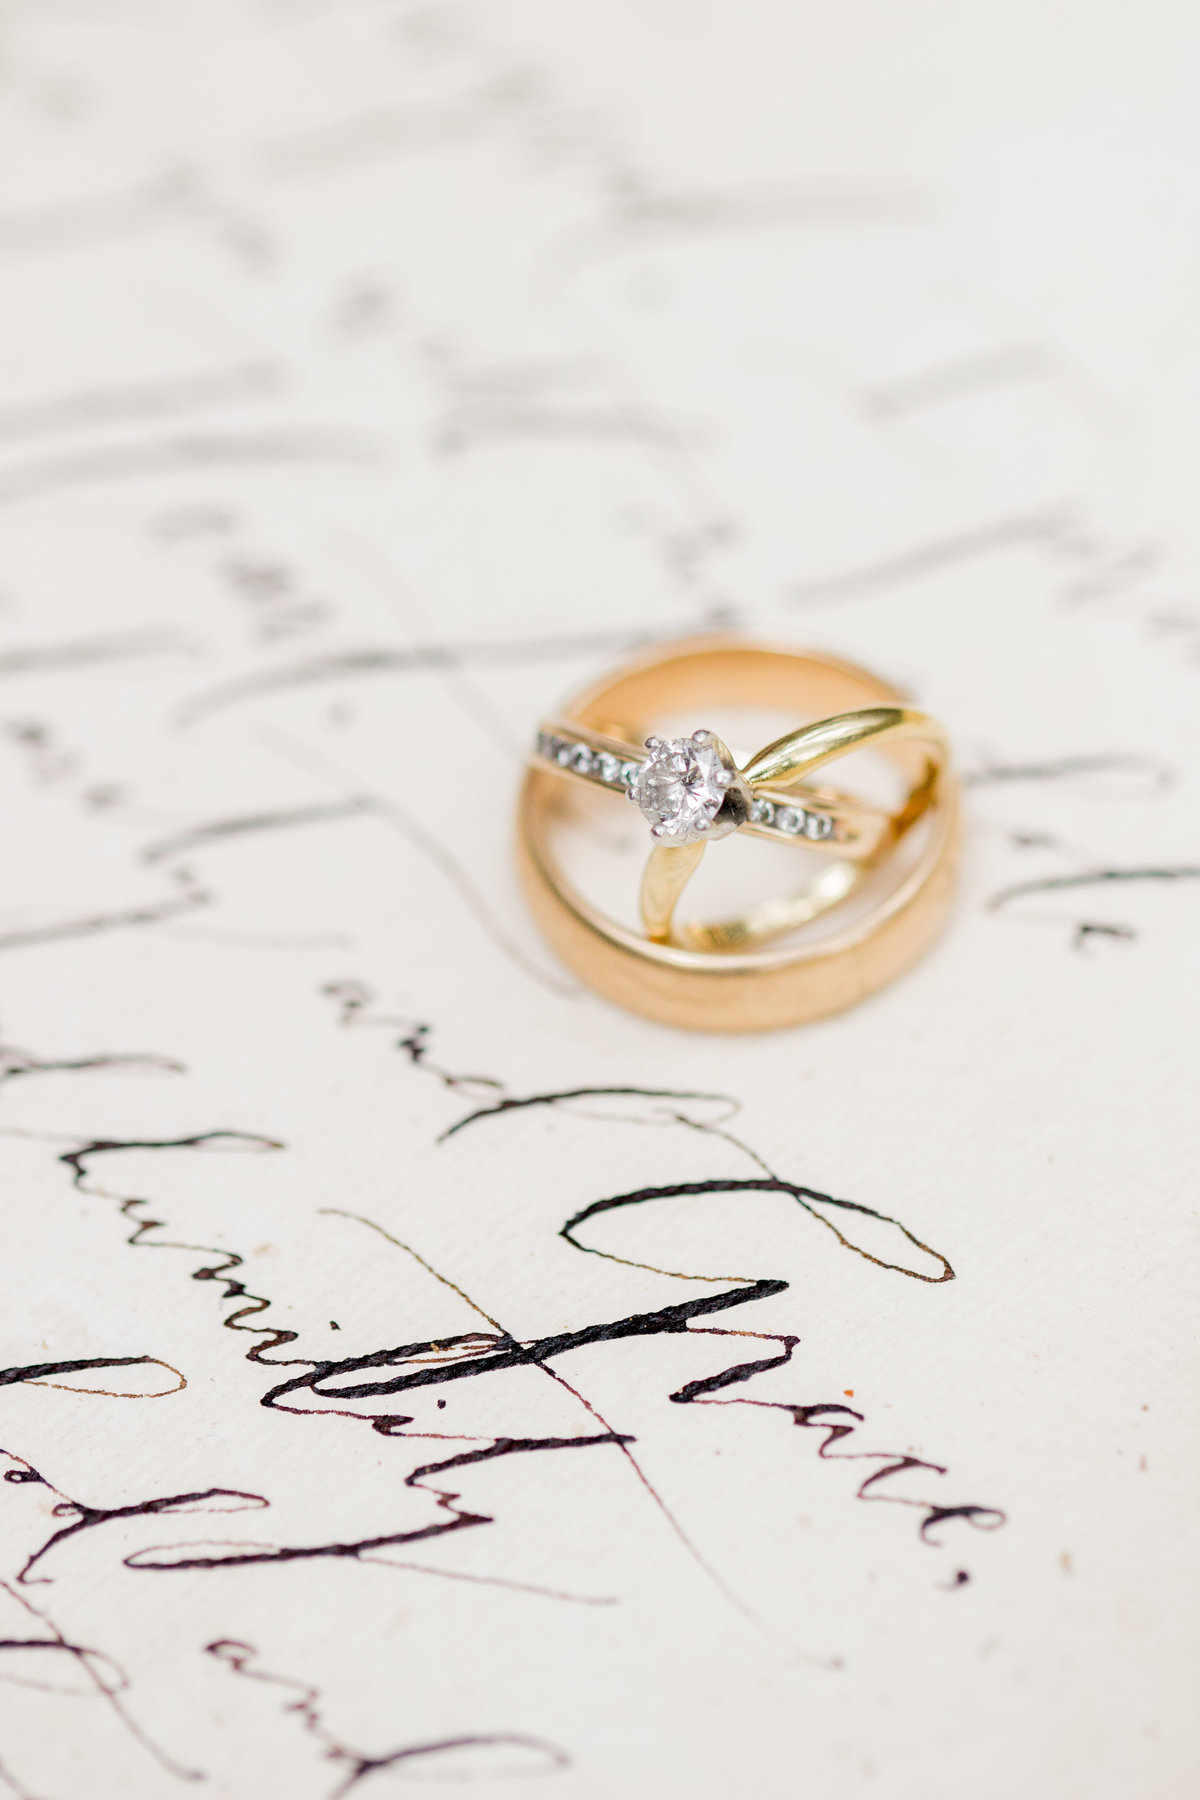 Washington Elopement Photographer captures close up of wedding rings on wedding invitation